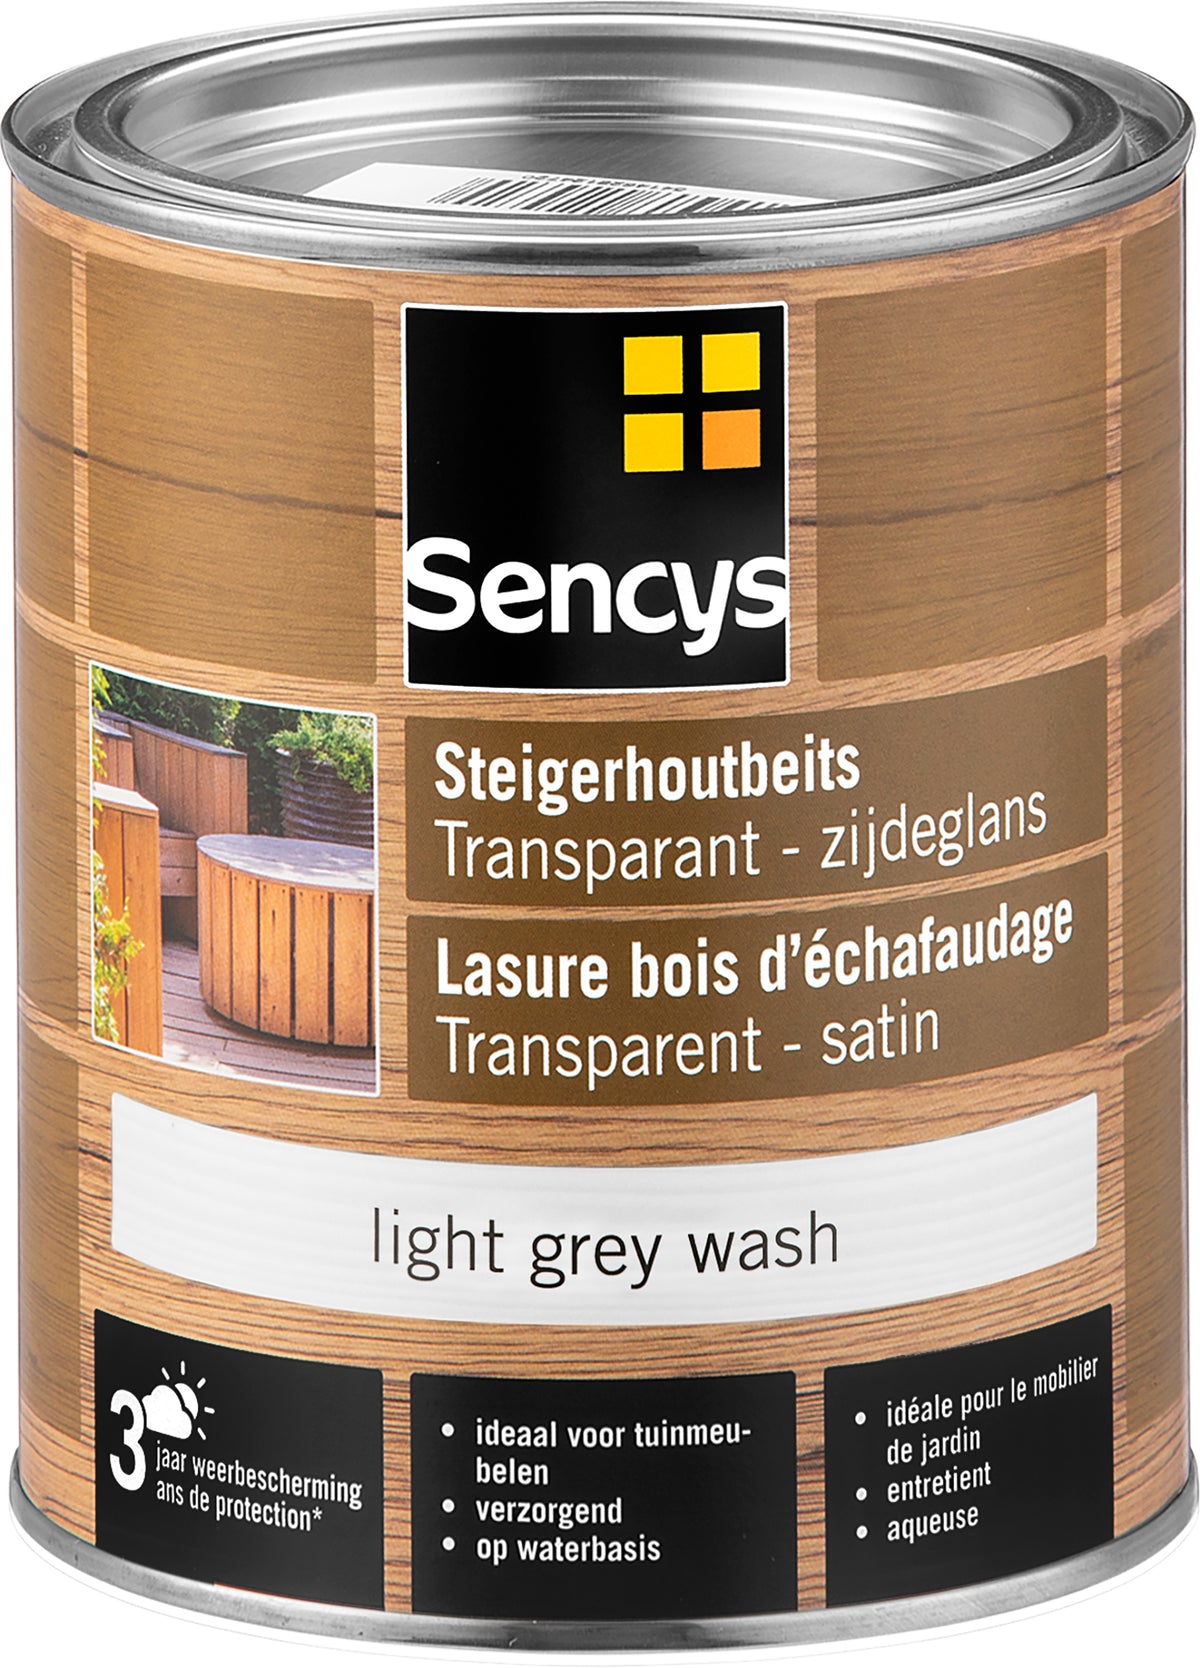 Sencys steigerhoutbeits transparant light grey wash 750ml